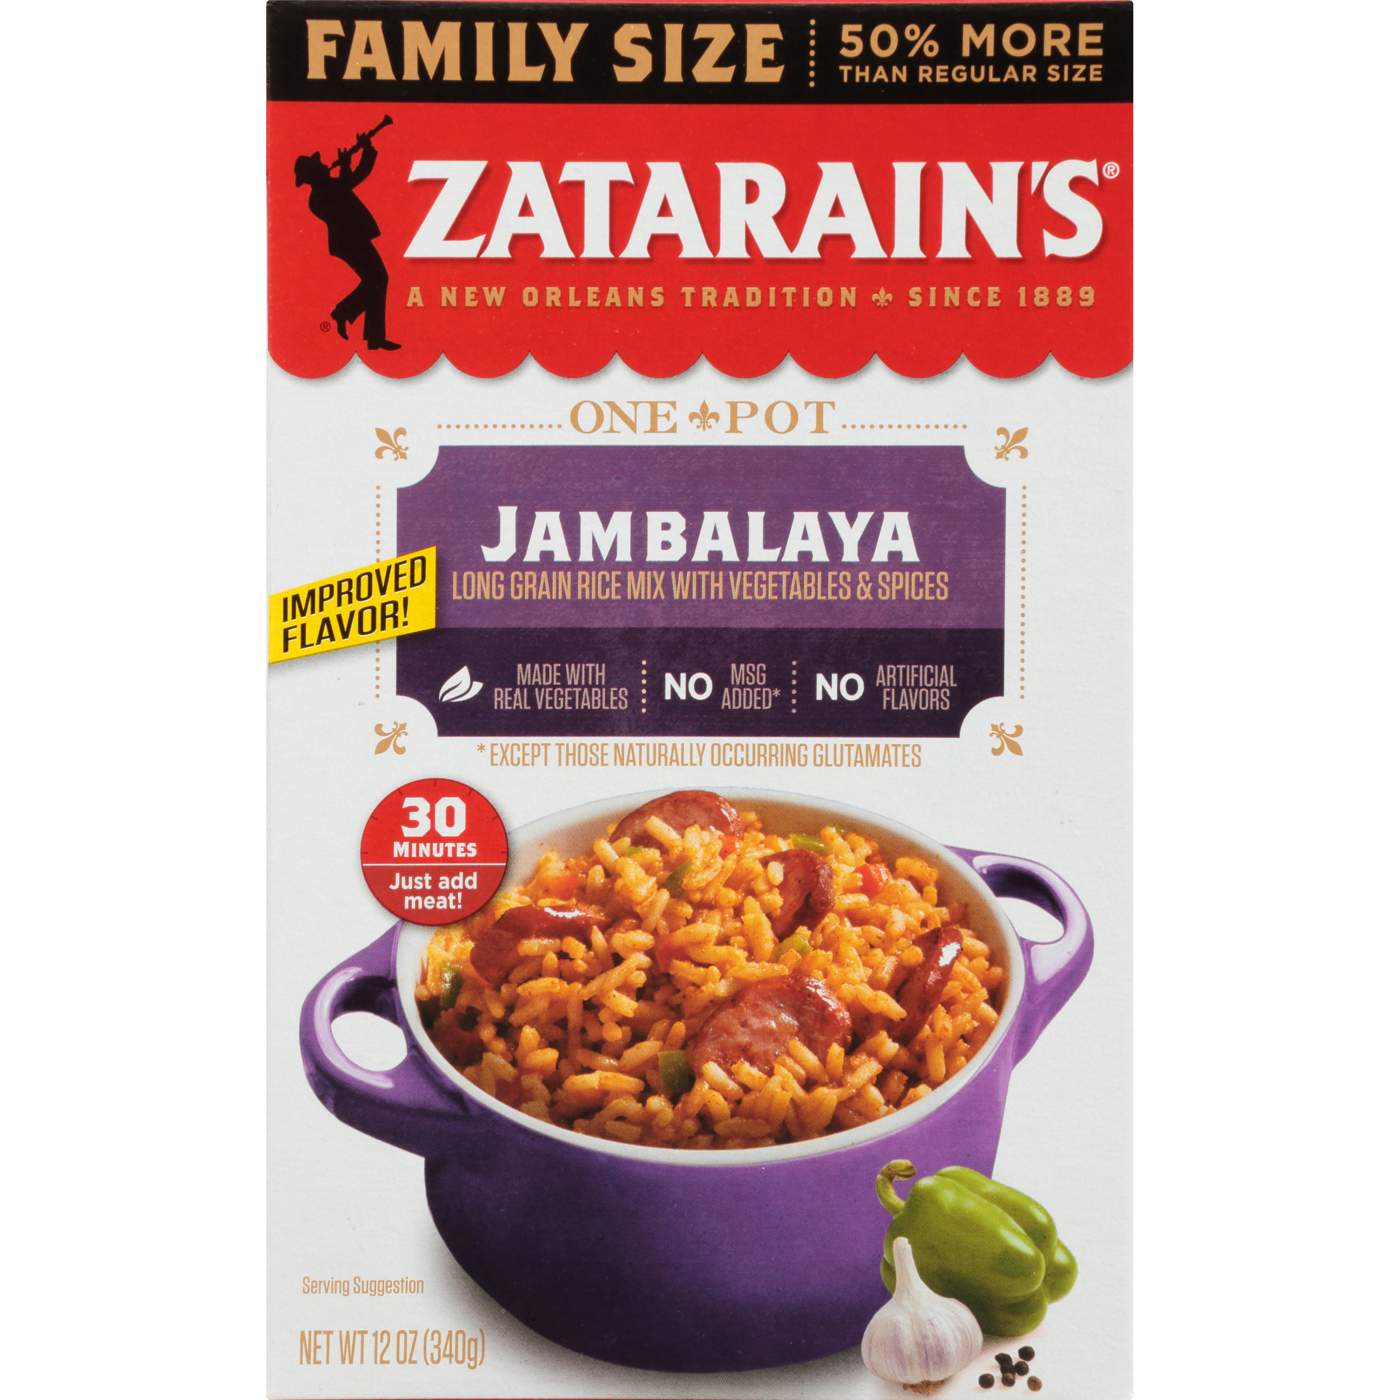 Zatarain's Jambalaya Rice Dinner Mix Family Size; image 1 of 5